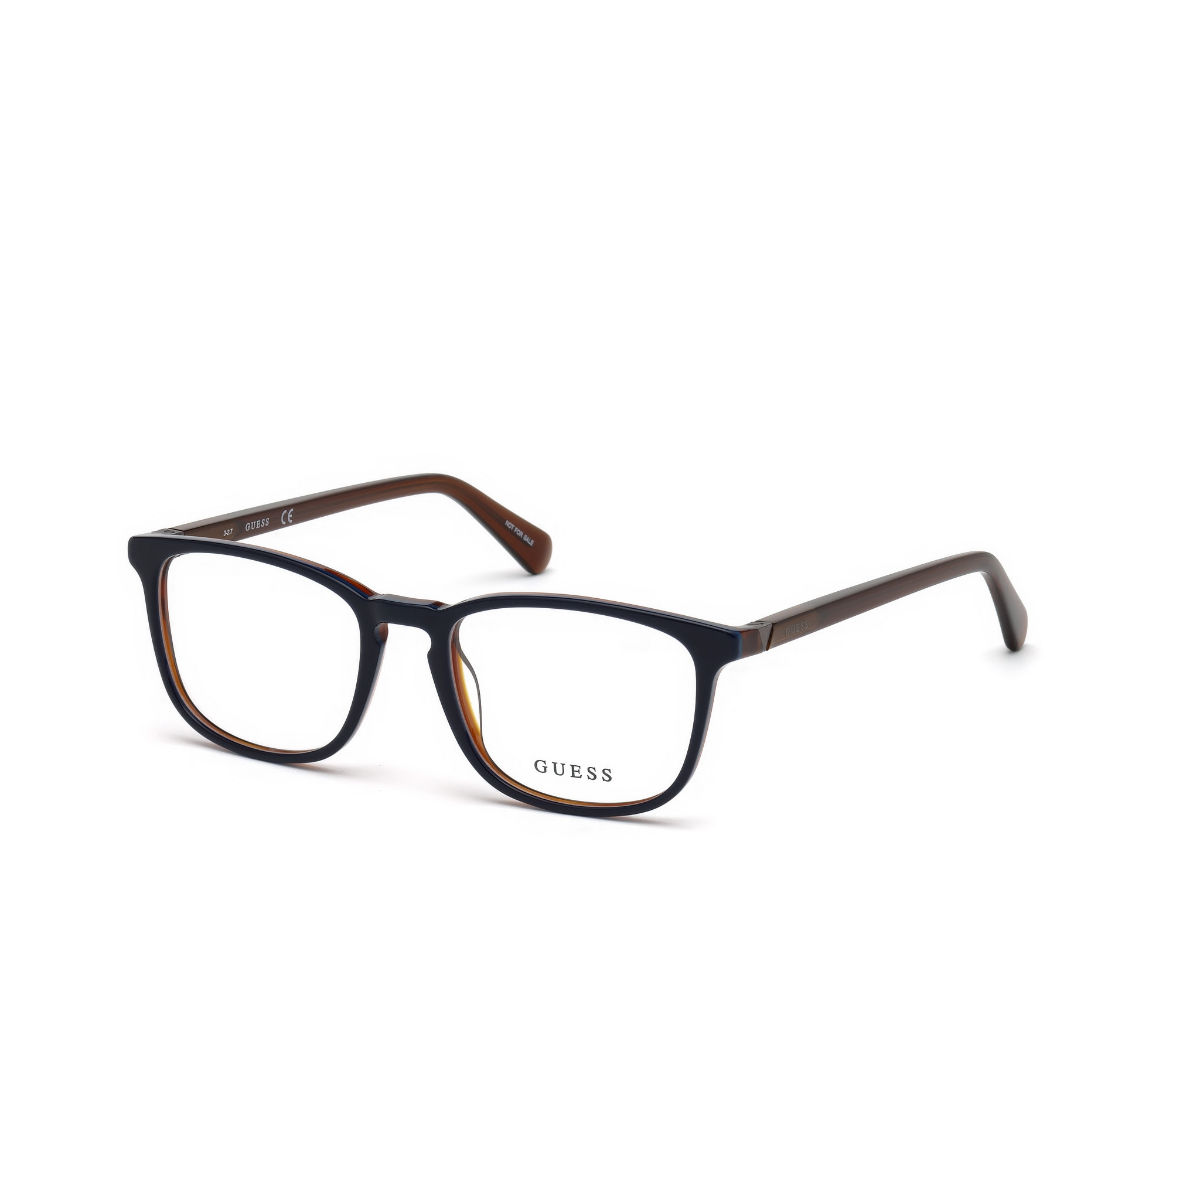 Guess Rectangular Blue Eyeglasses GU1950 52 092: Buy Guess